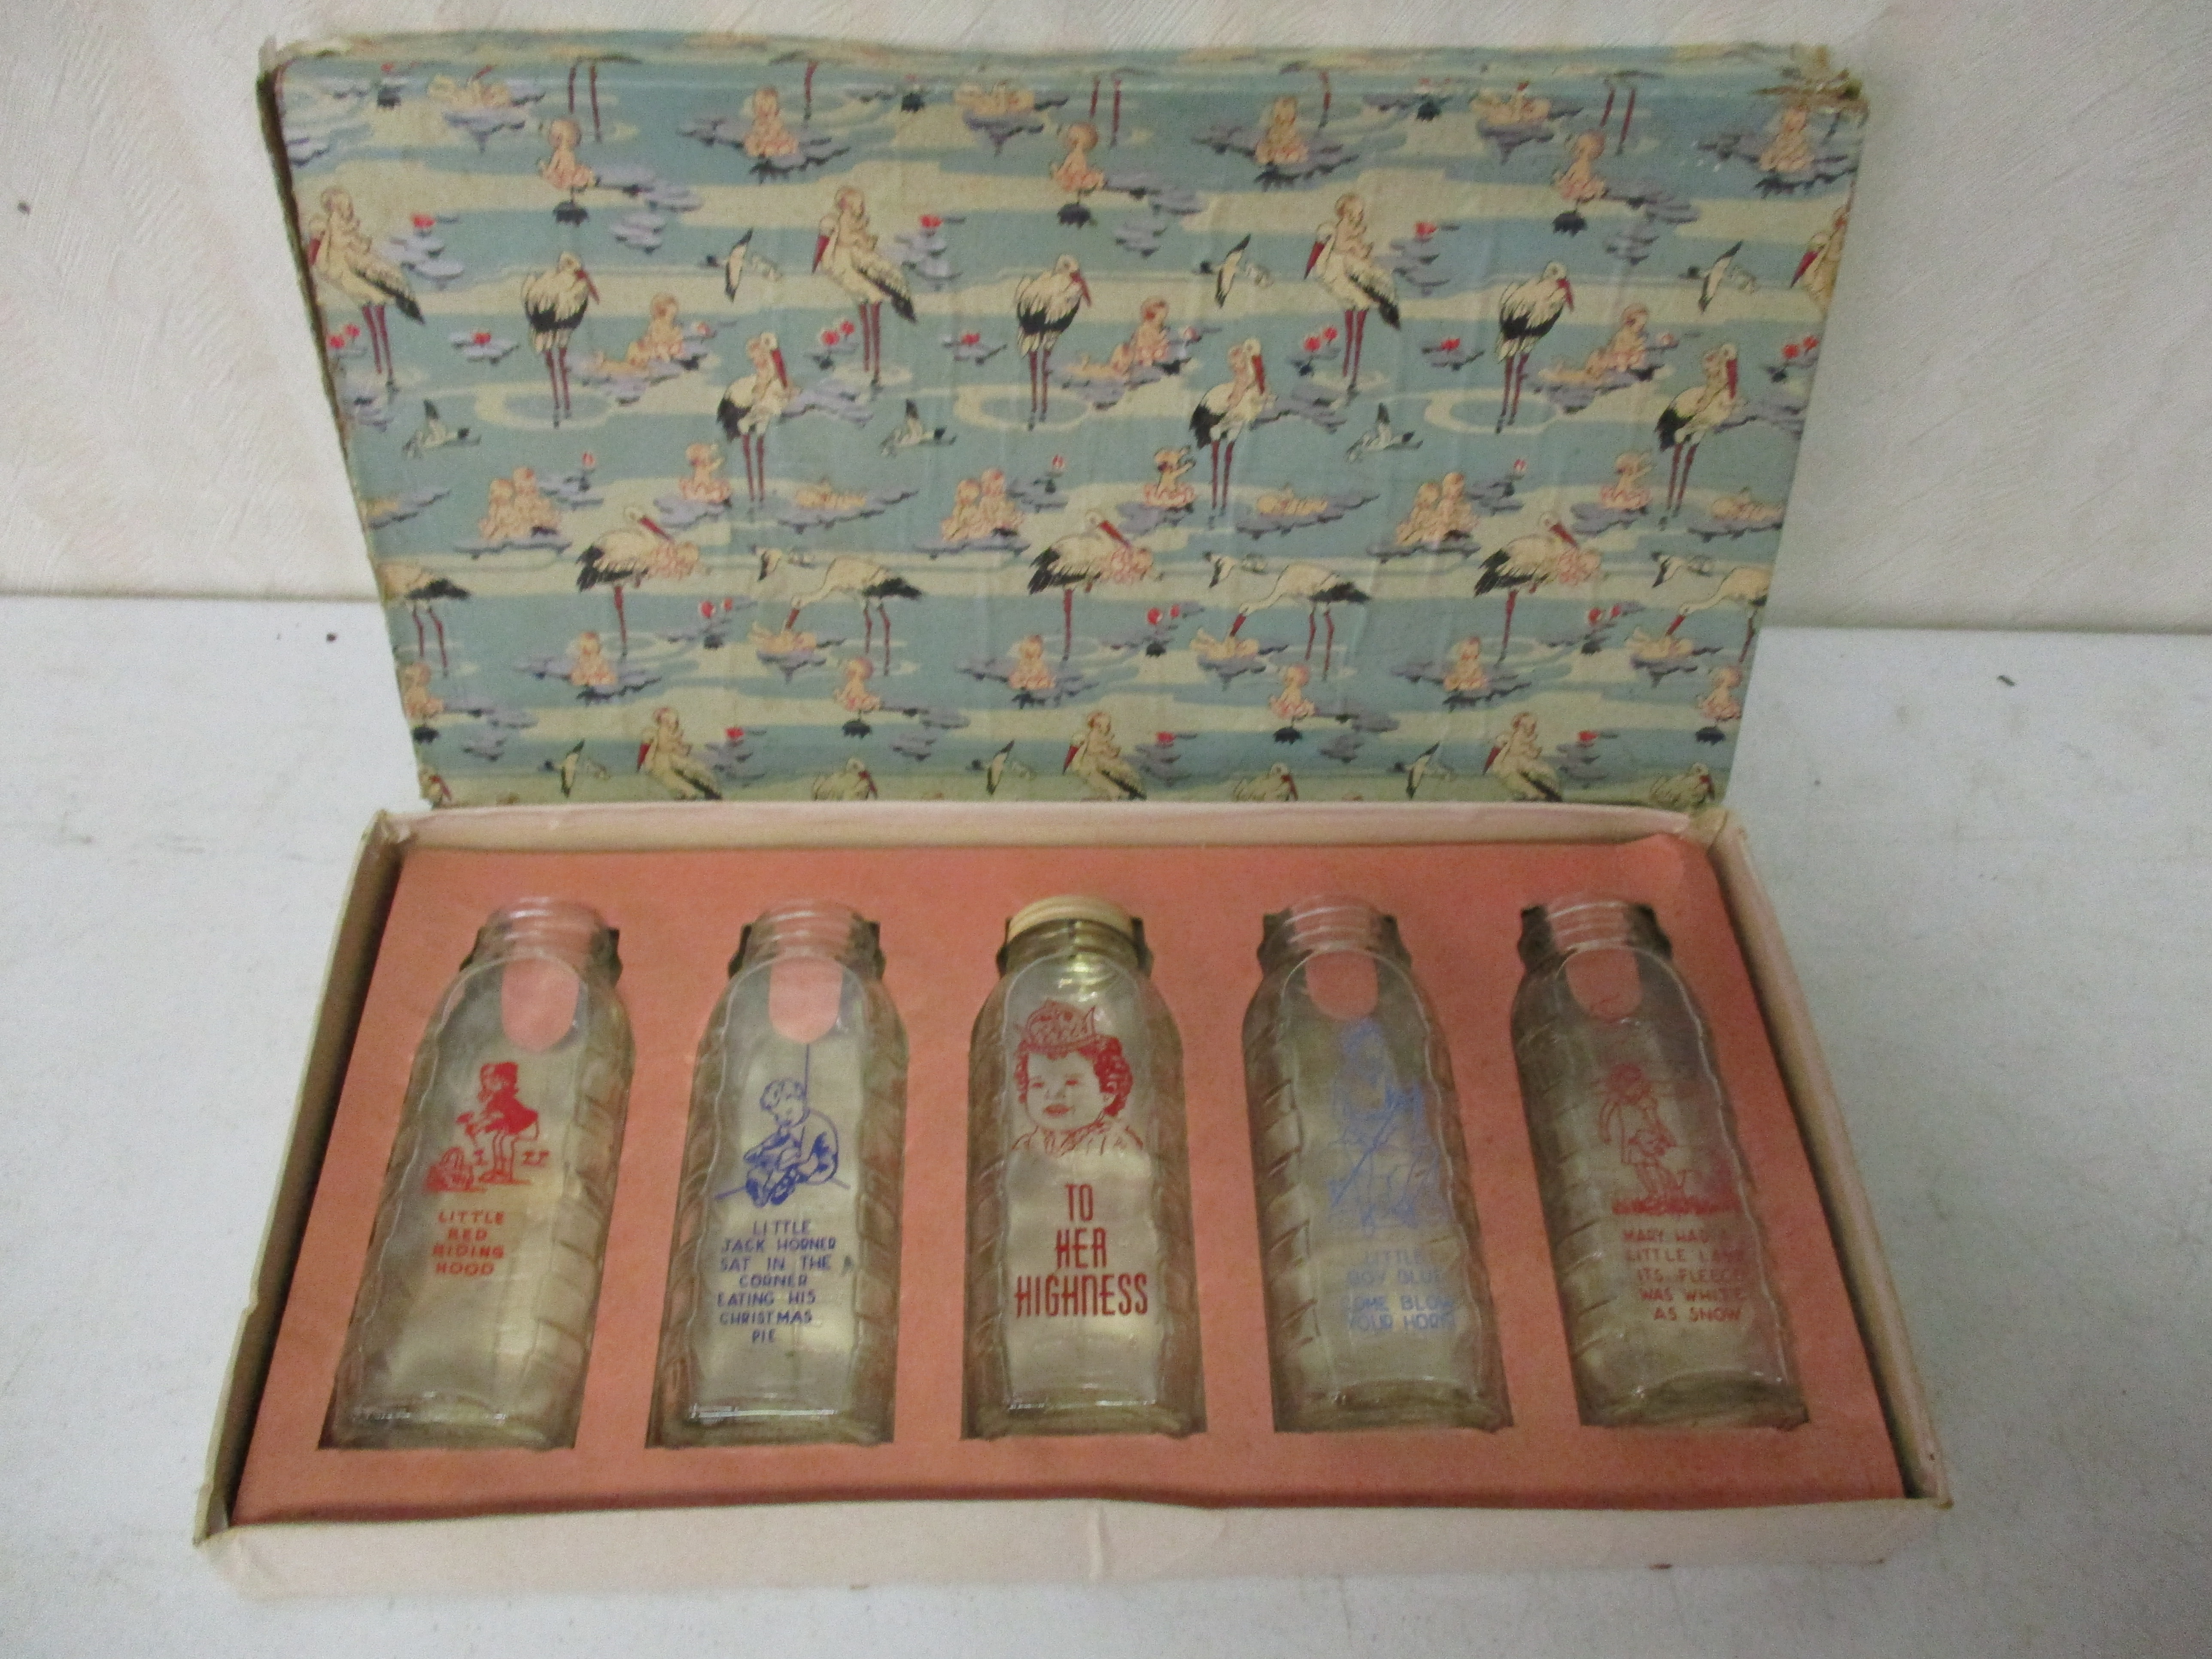 Lot 193: Moore's Dairy, OH (5) Baby Bottles With Nursery Rhymes In Original Box